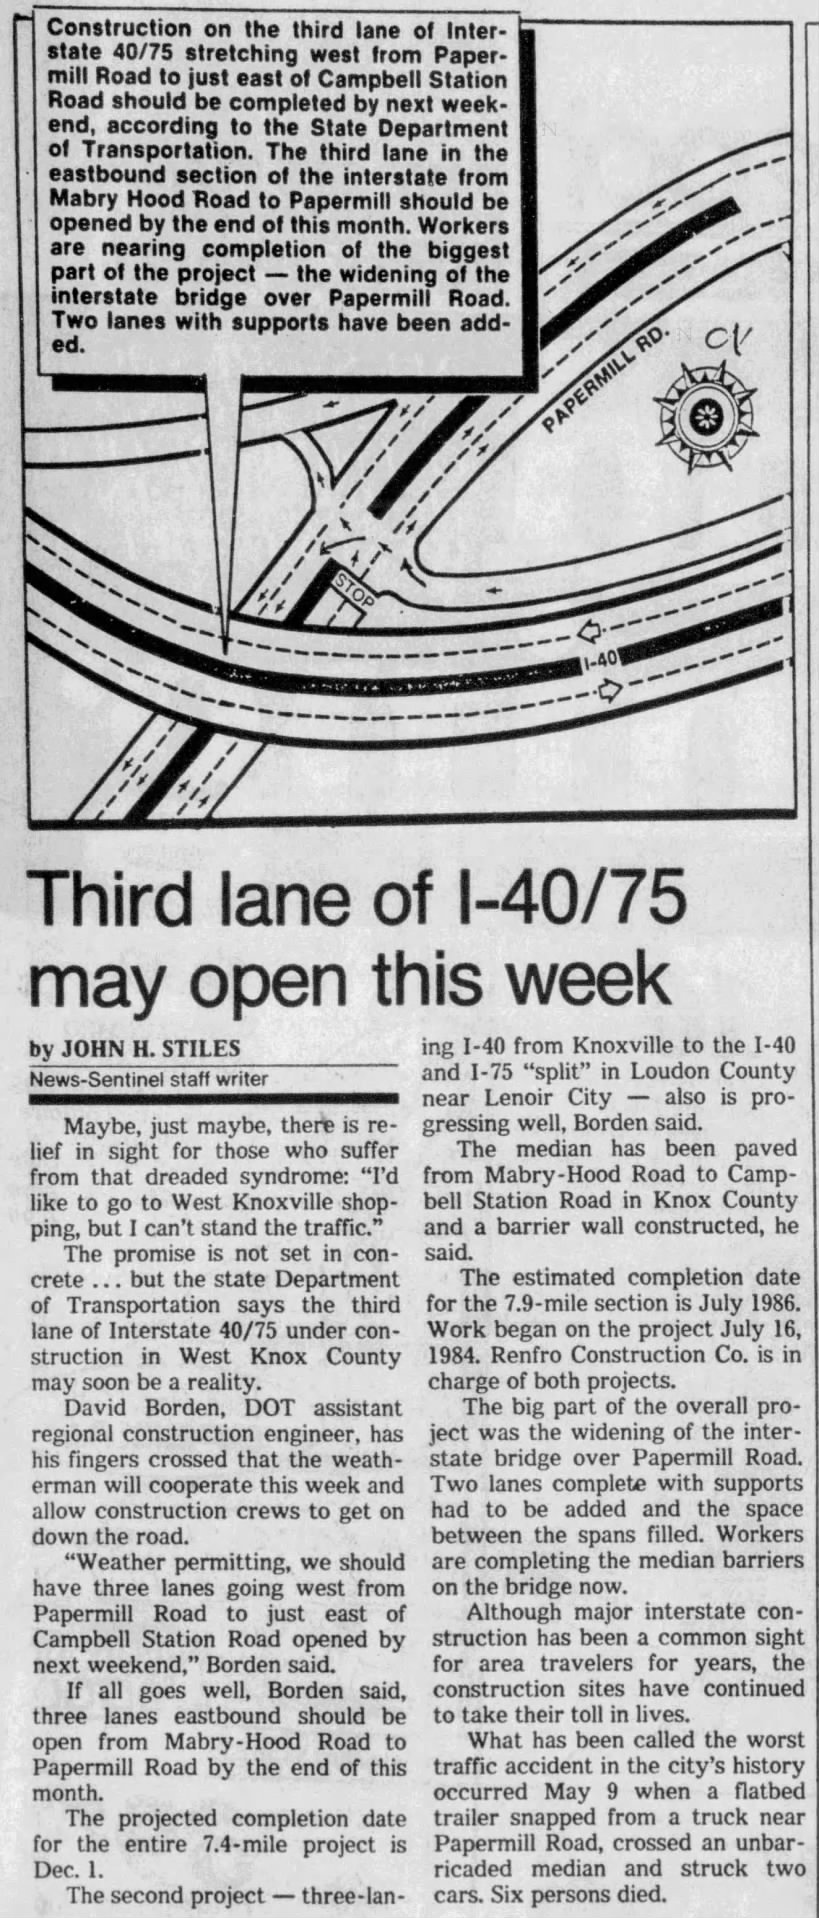 Third lane of I-40/75 may open this week